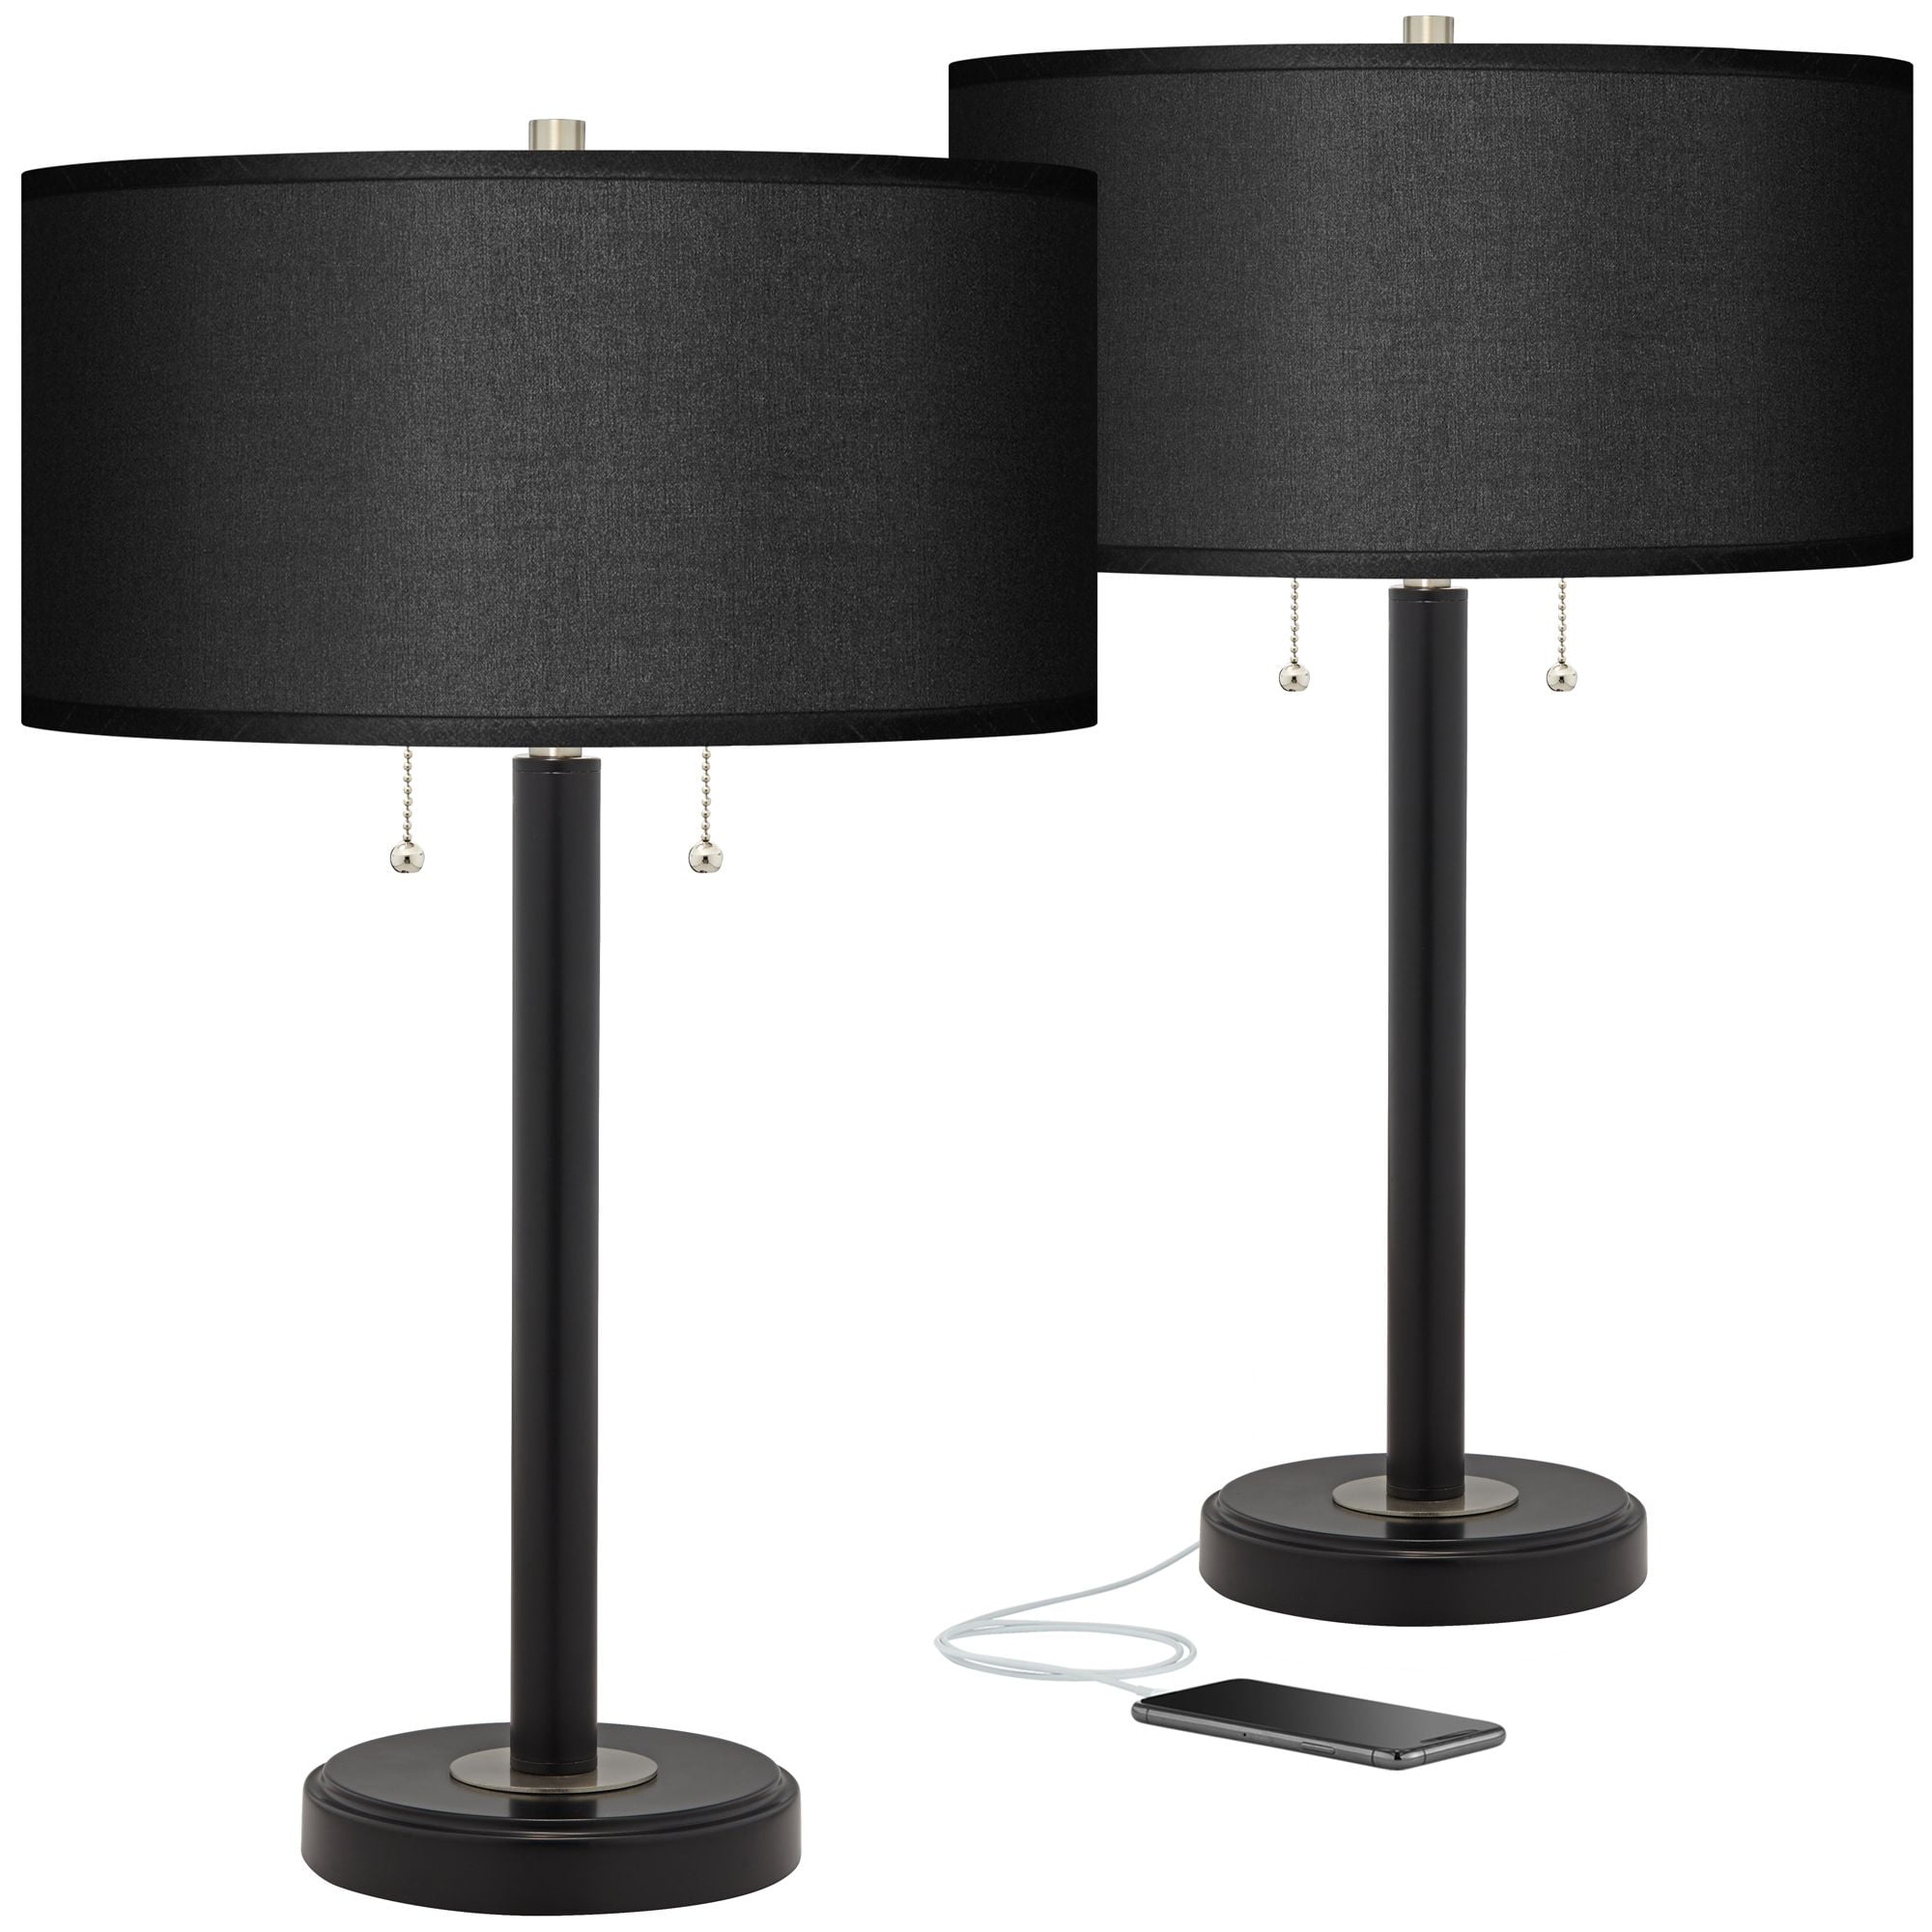 360 Lighting Camile Modern Table Lamps 25 High Set of 2 Brass Metal with  USB Charging Port Oatmeal Drum Shade for Bedroom Living Room Bedside Desk